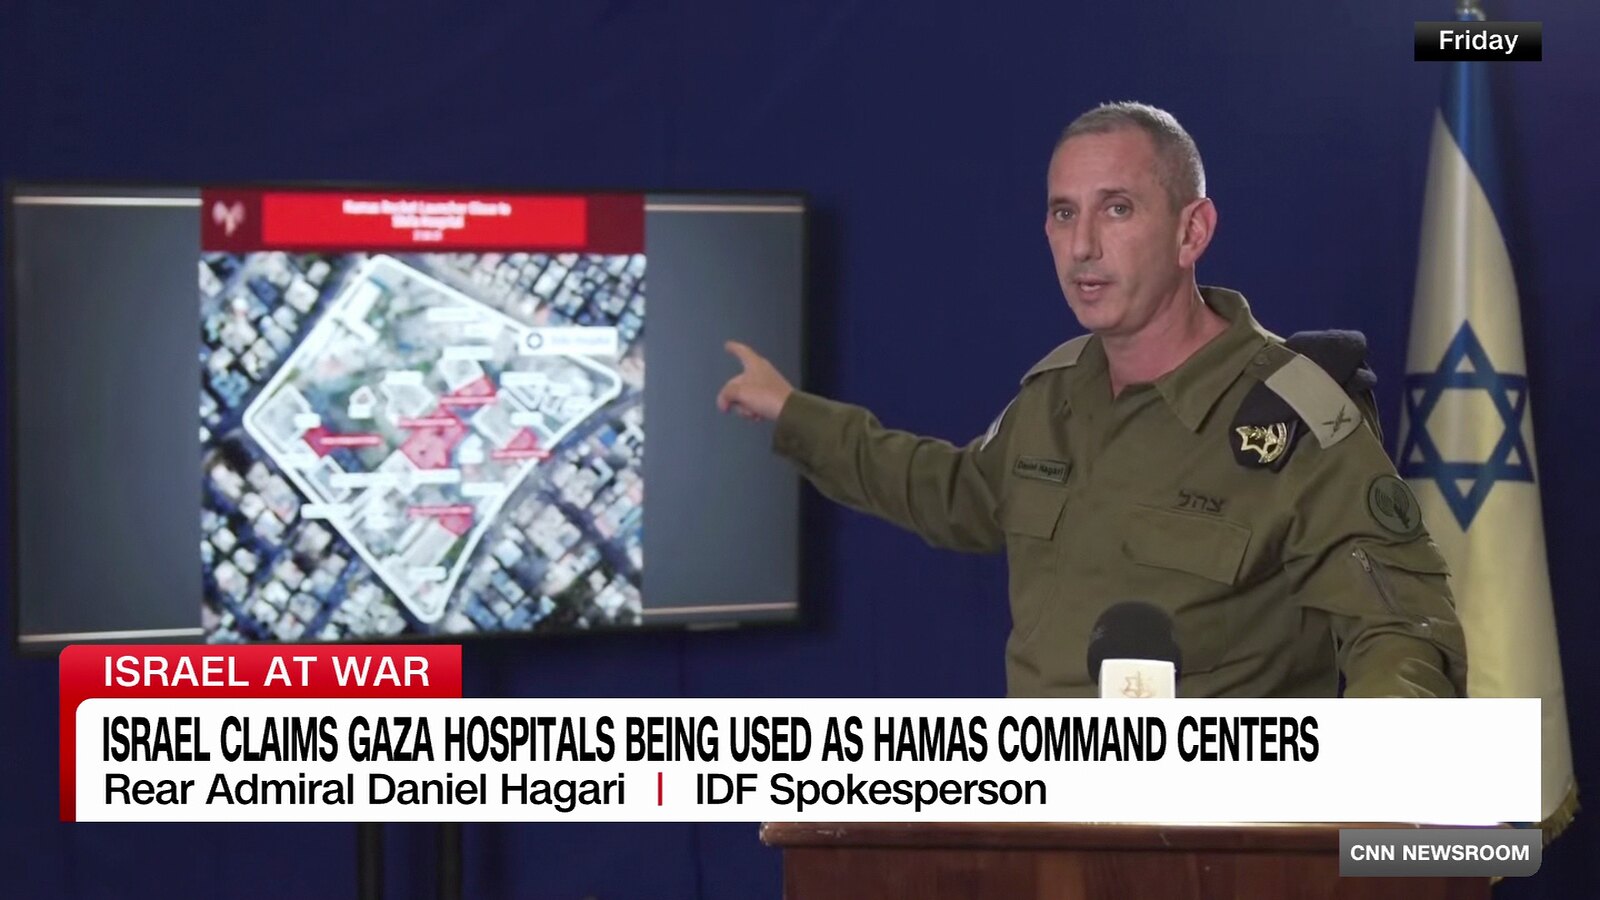 CNN報導以色列軍方指控「加薩醫院被哈瑪斯當作指揮中心使用」。（圖片來源：CNN）